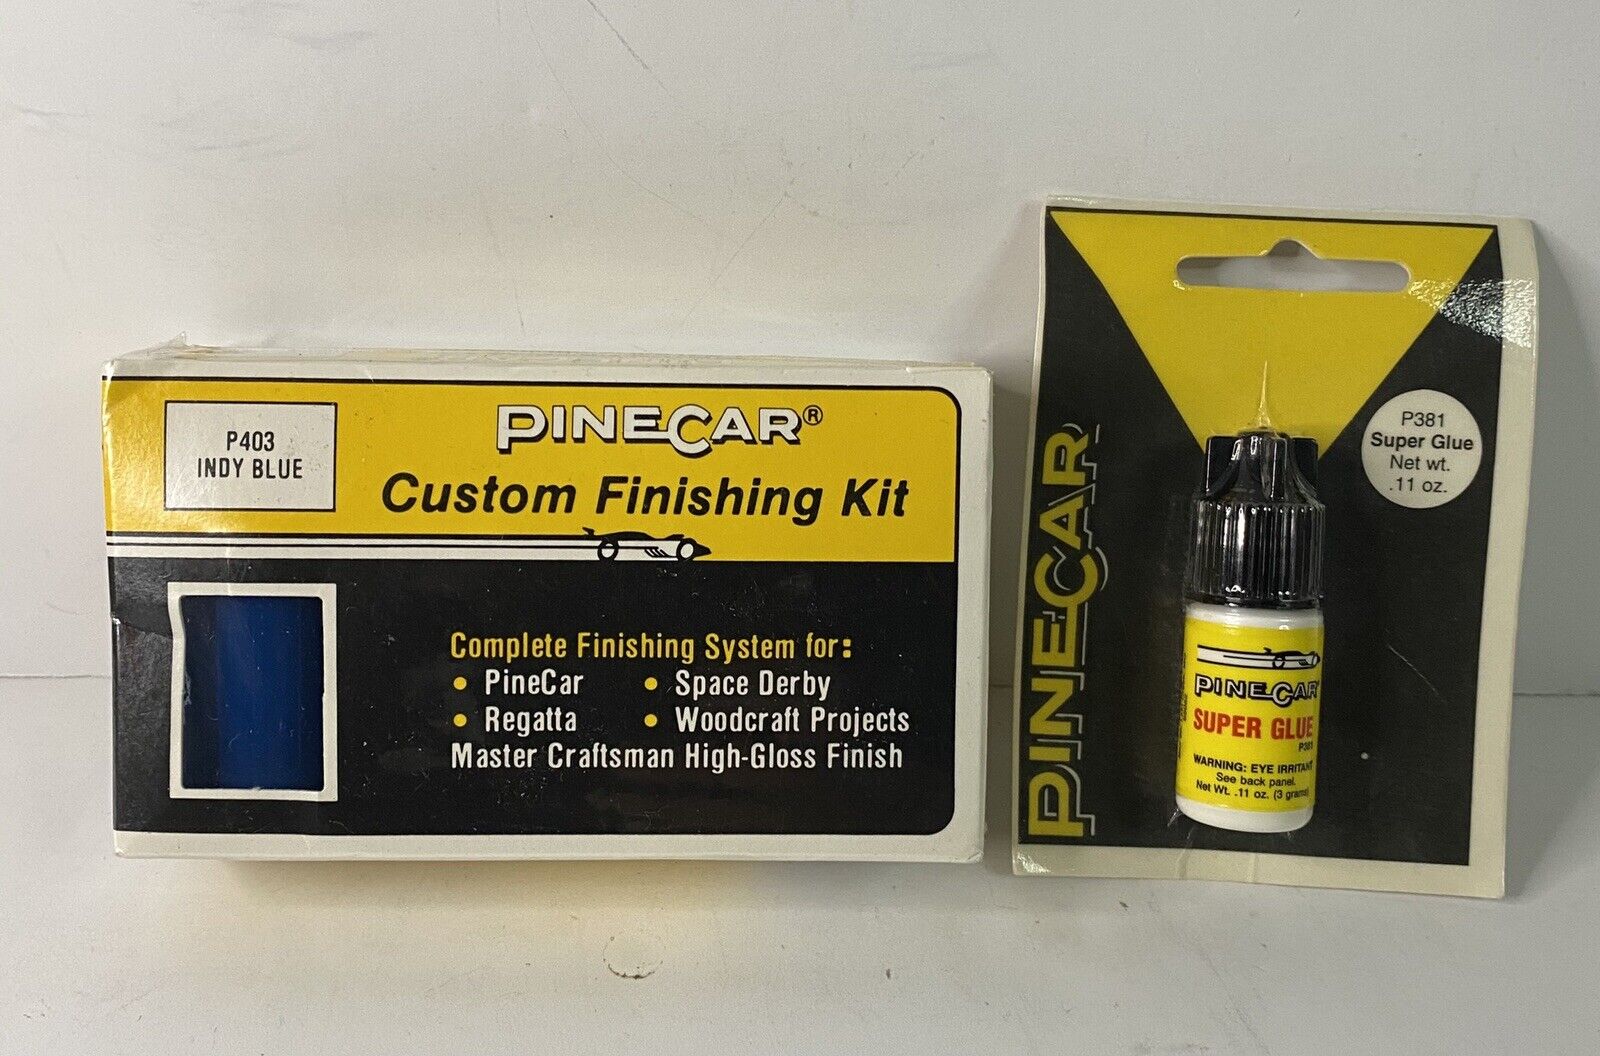 PineCar Custom Finishing Kit, P403 Indy Blue. Plus, a P381 Super Glue .11oz.